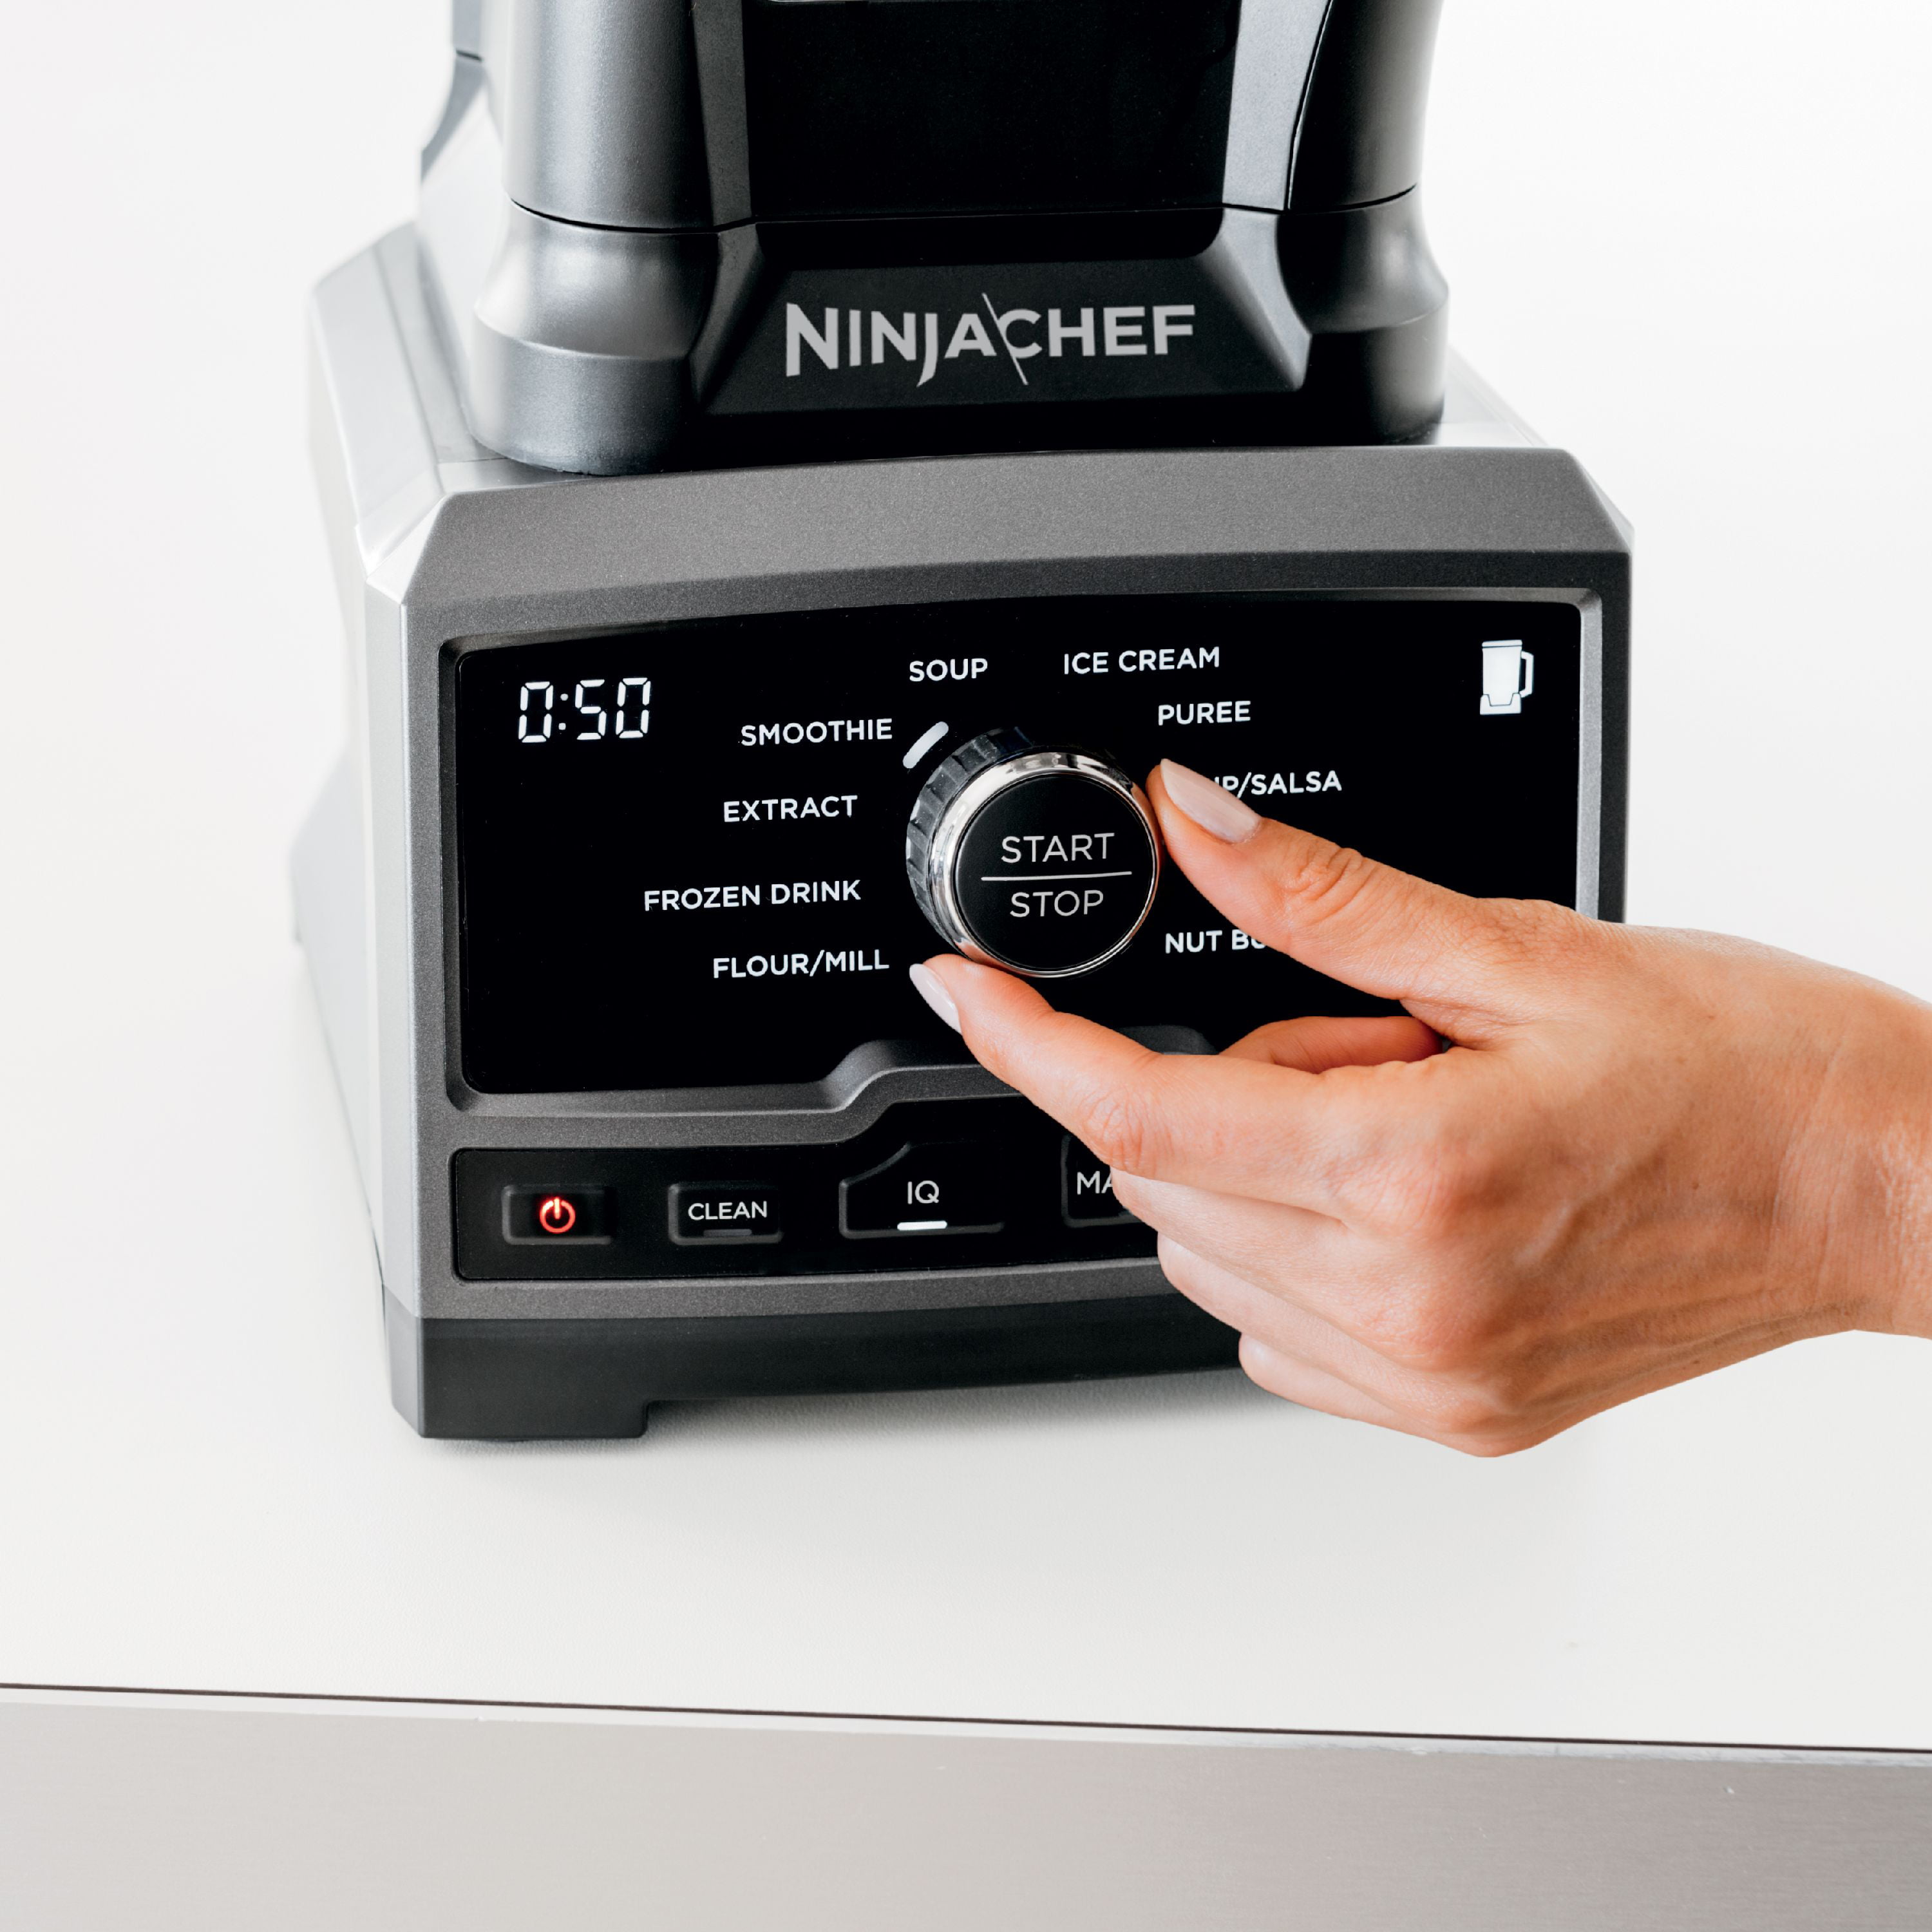 Introducing the Ninja Chef™ Blender (CT800 Series) 